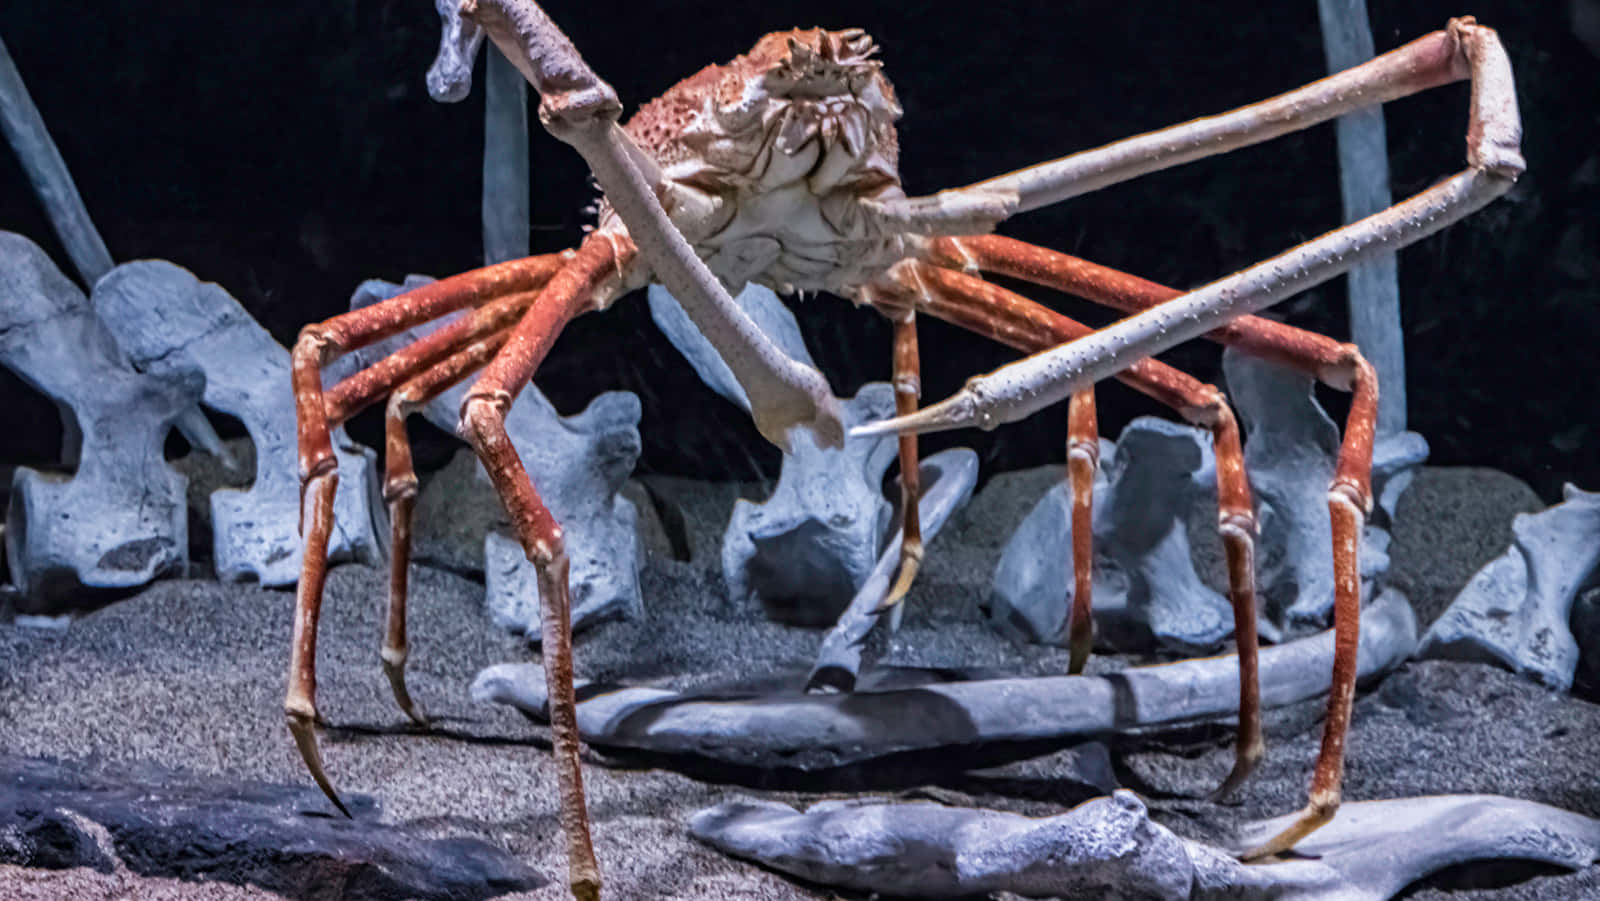 Giant Spider Crab Display Wallpaper